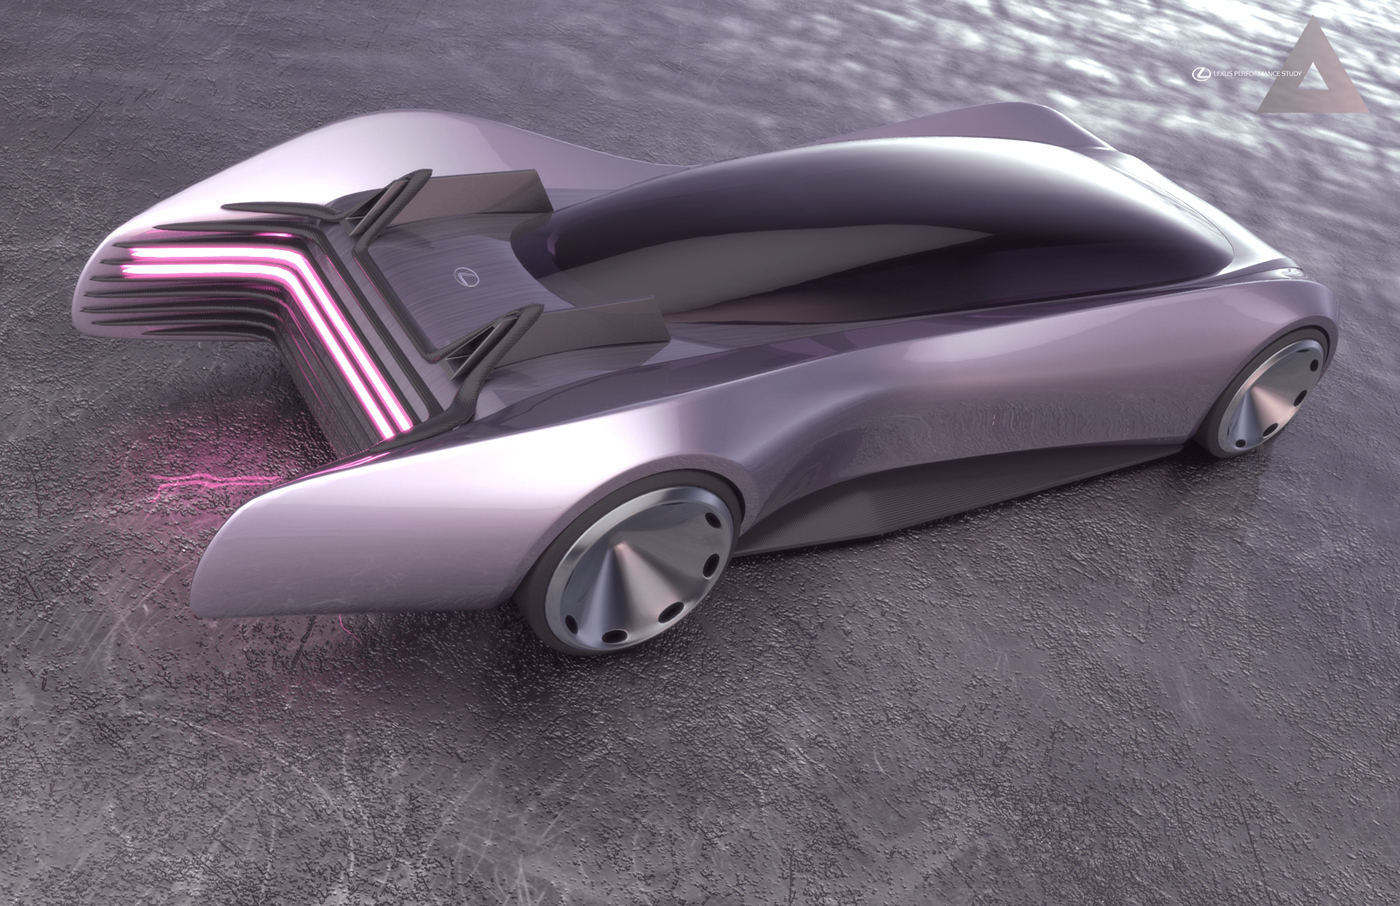 design car design Vehicle Design Transportation Design 3D model Lexus exterior design supercar